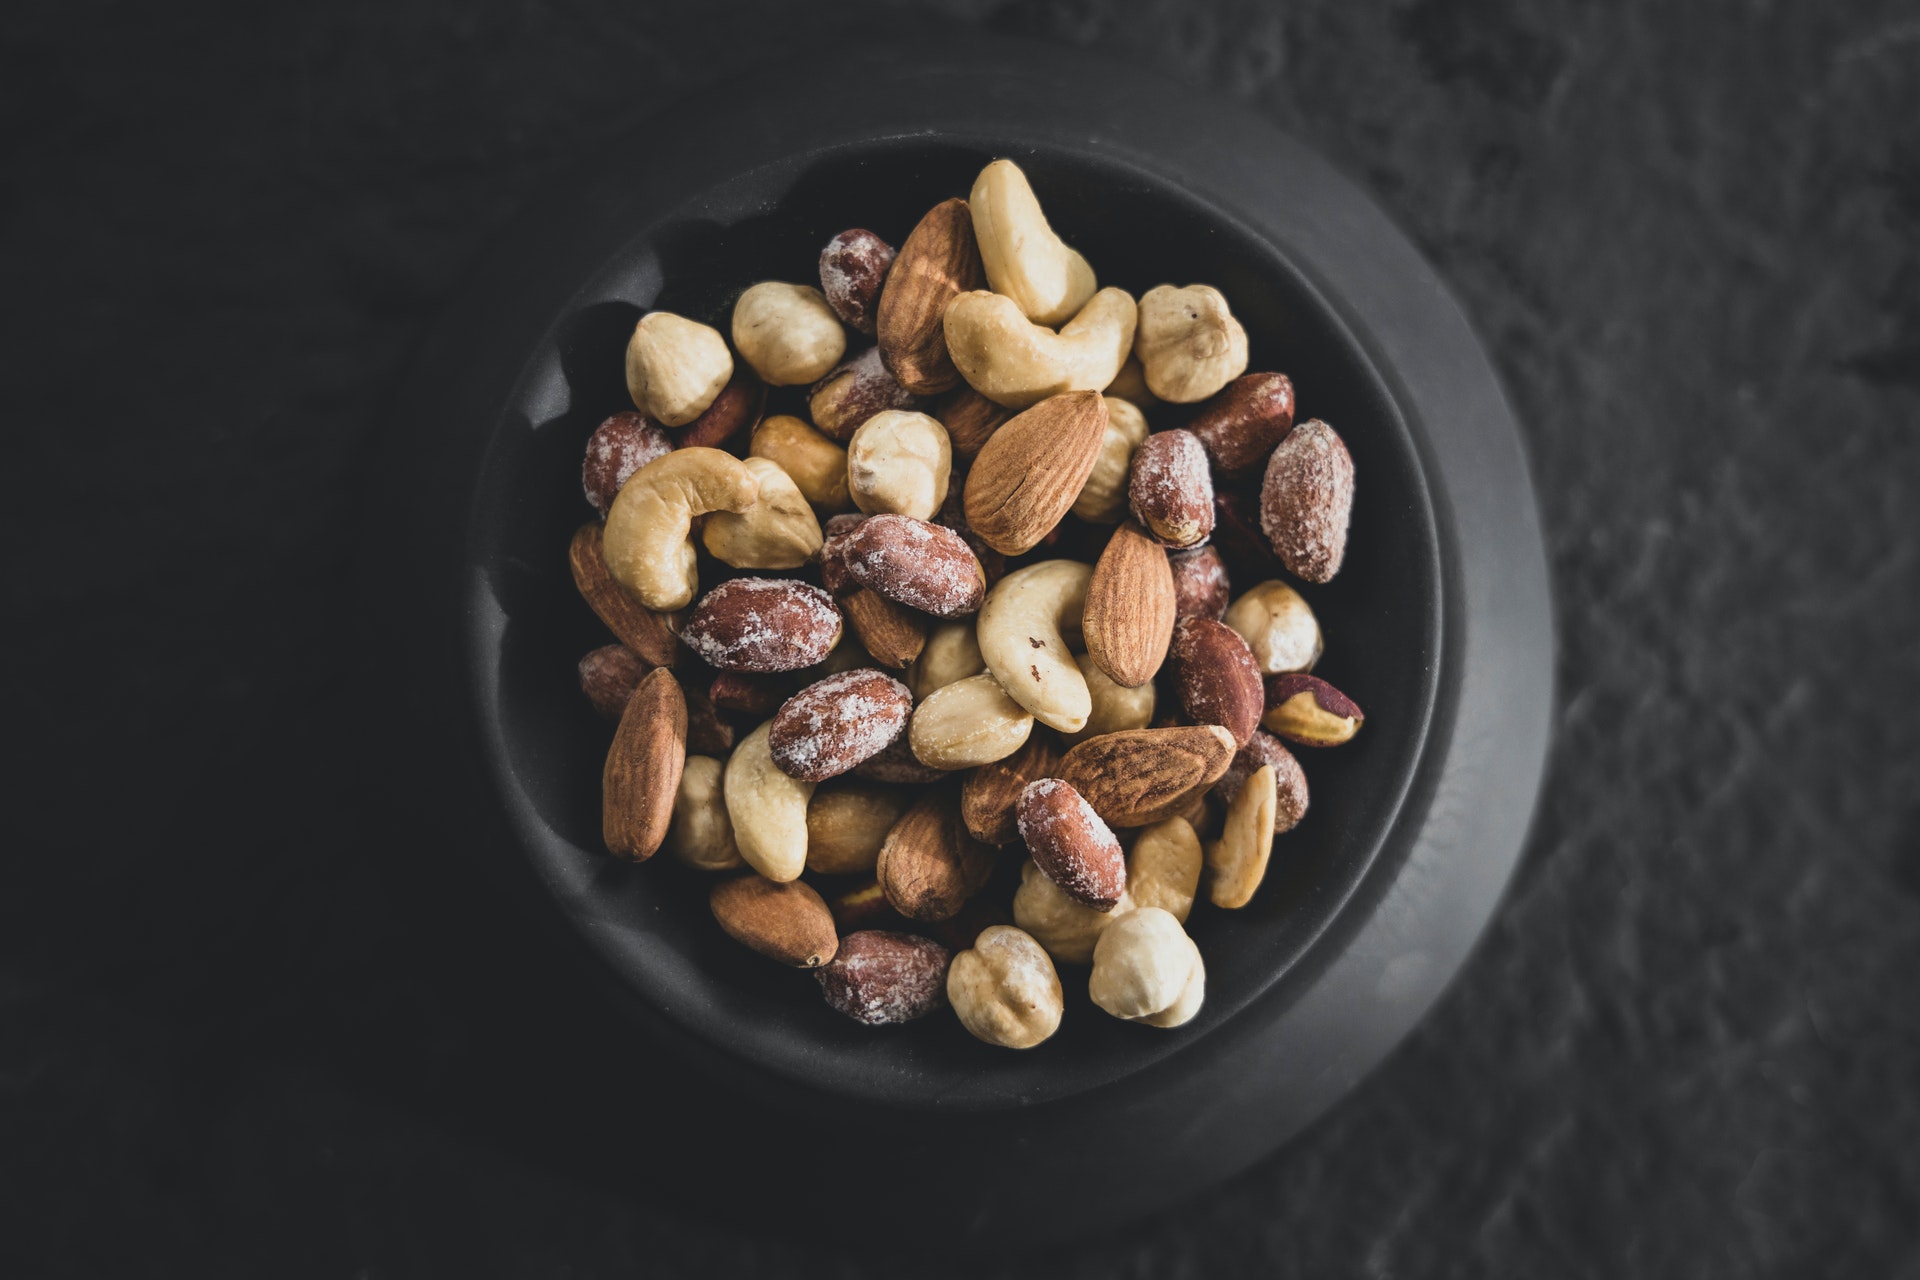 Almonds and hazelnuts